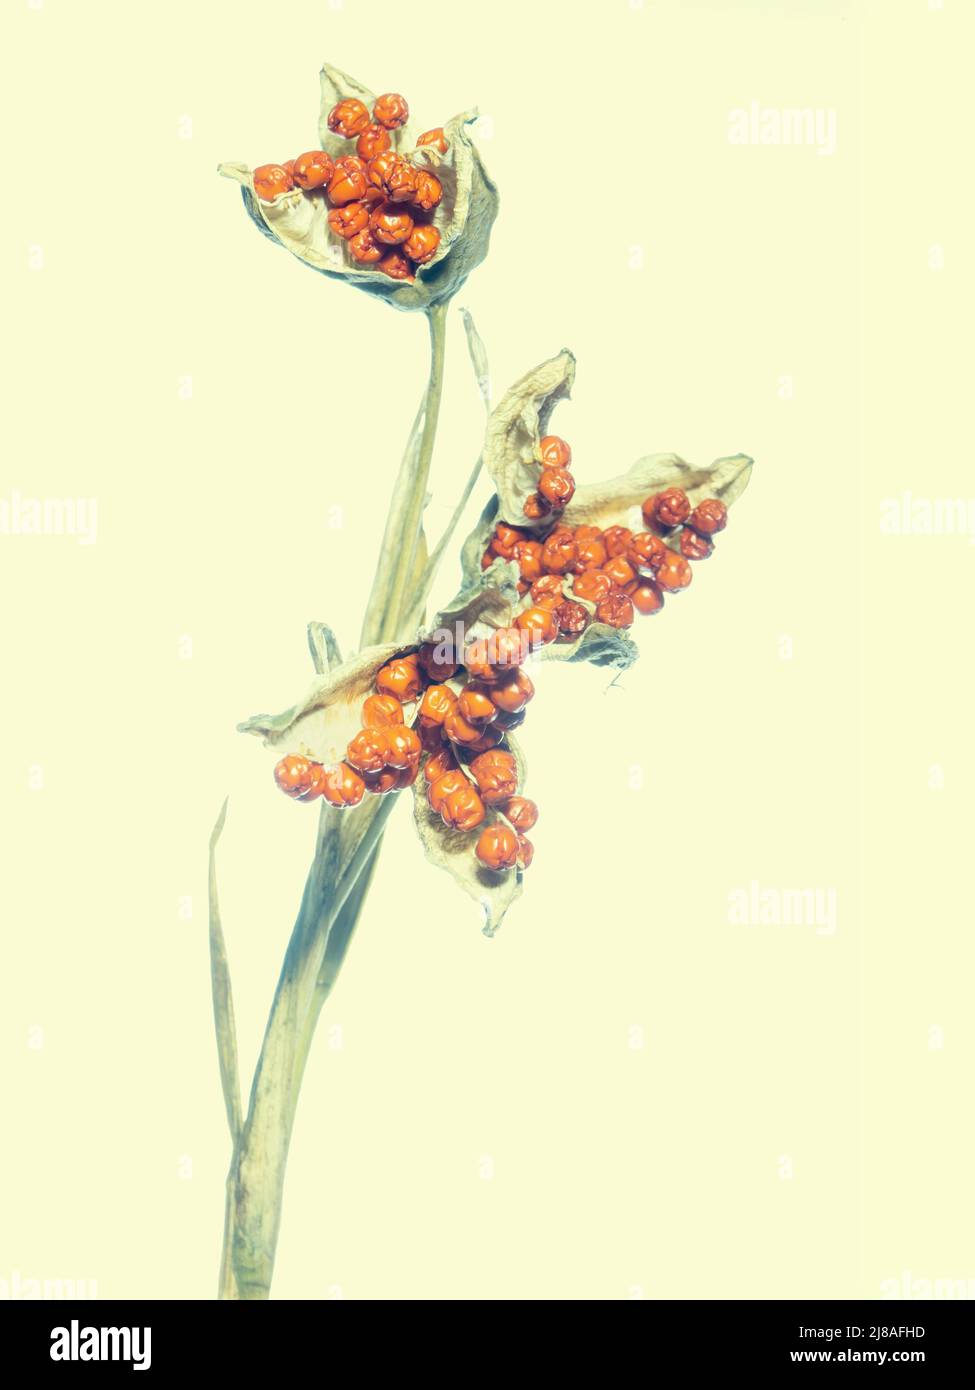 Seeds and pods of Iris foetidissima aka Stinking Iris. Artistically processed image. Stock Photo